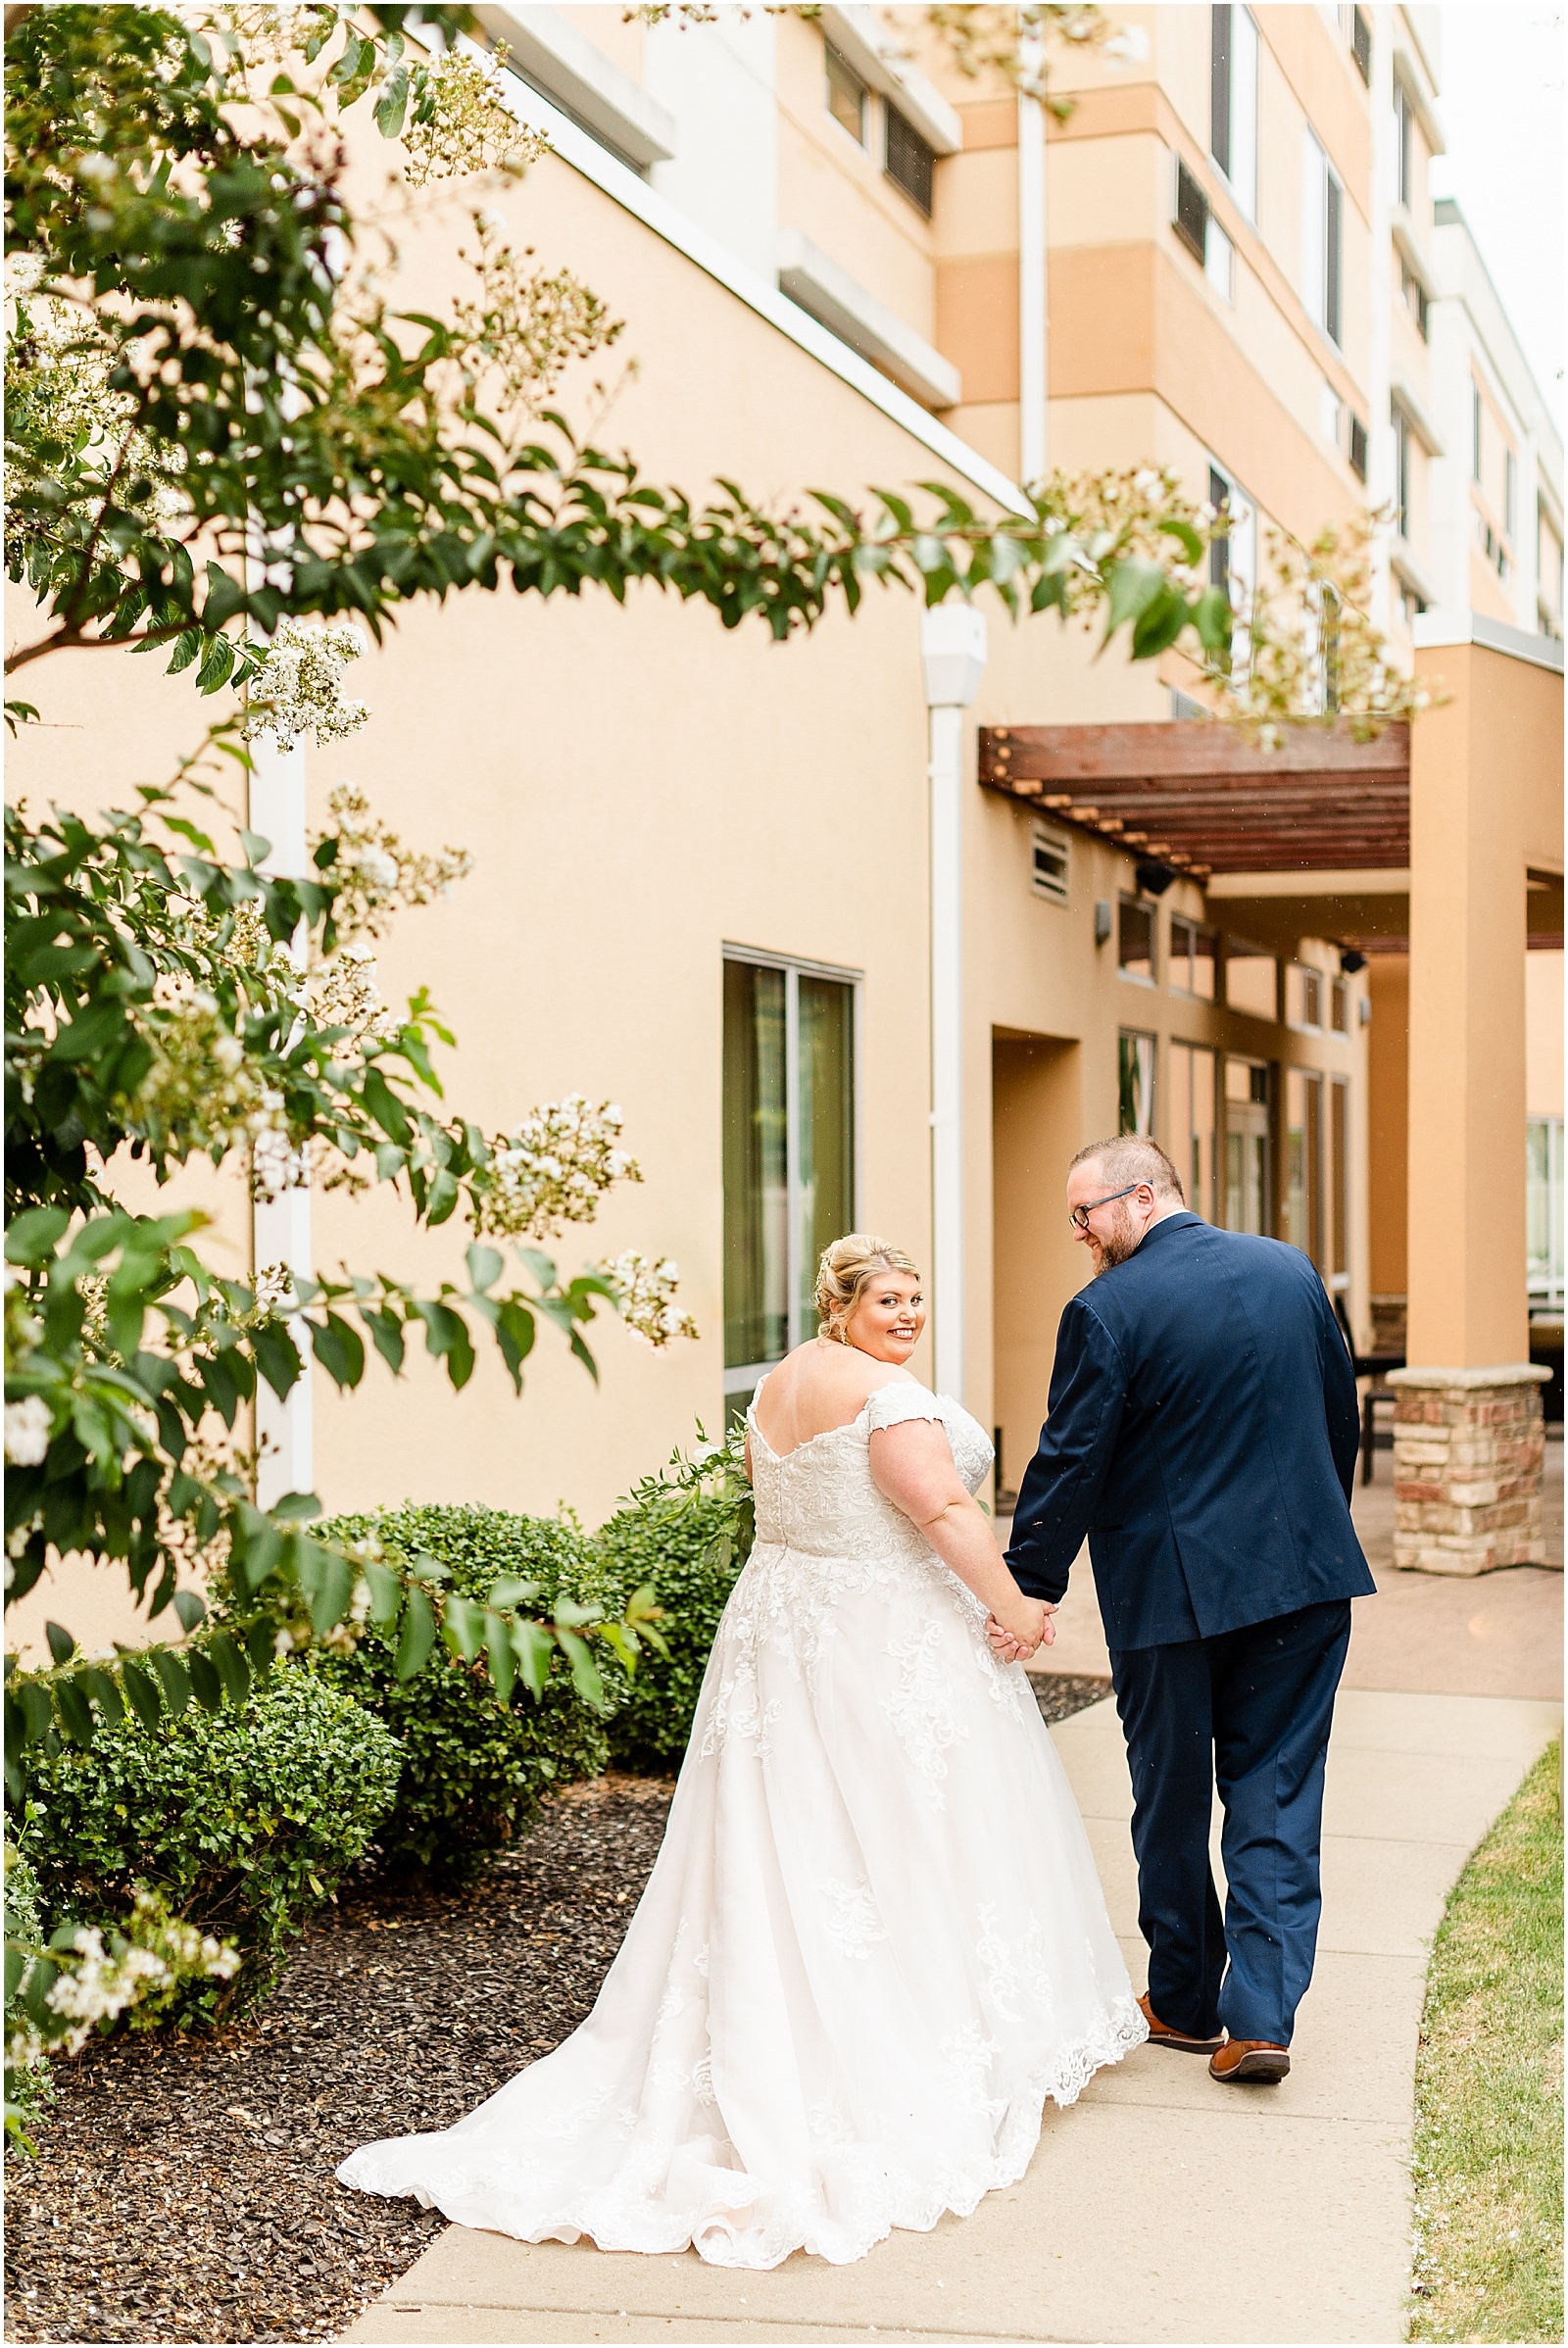 Brittany and Neil's Wedding at Neu Chapel Bret and Brandie | Evansville Photographers | @bretandbrandie-0067.jpg